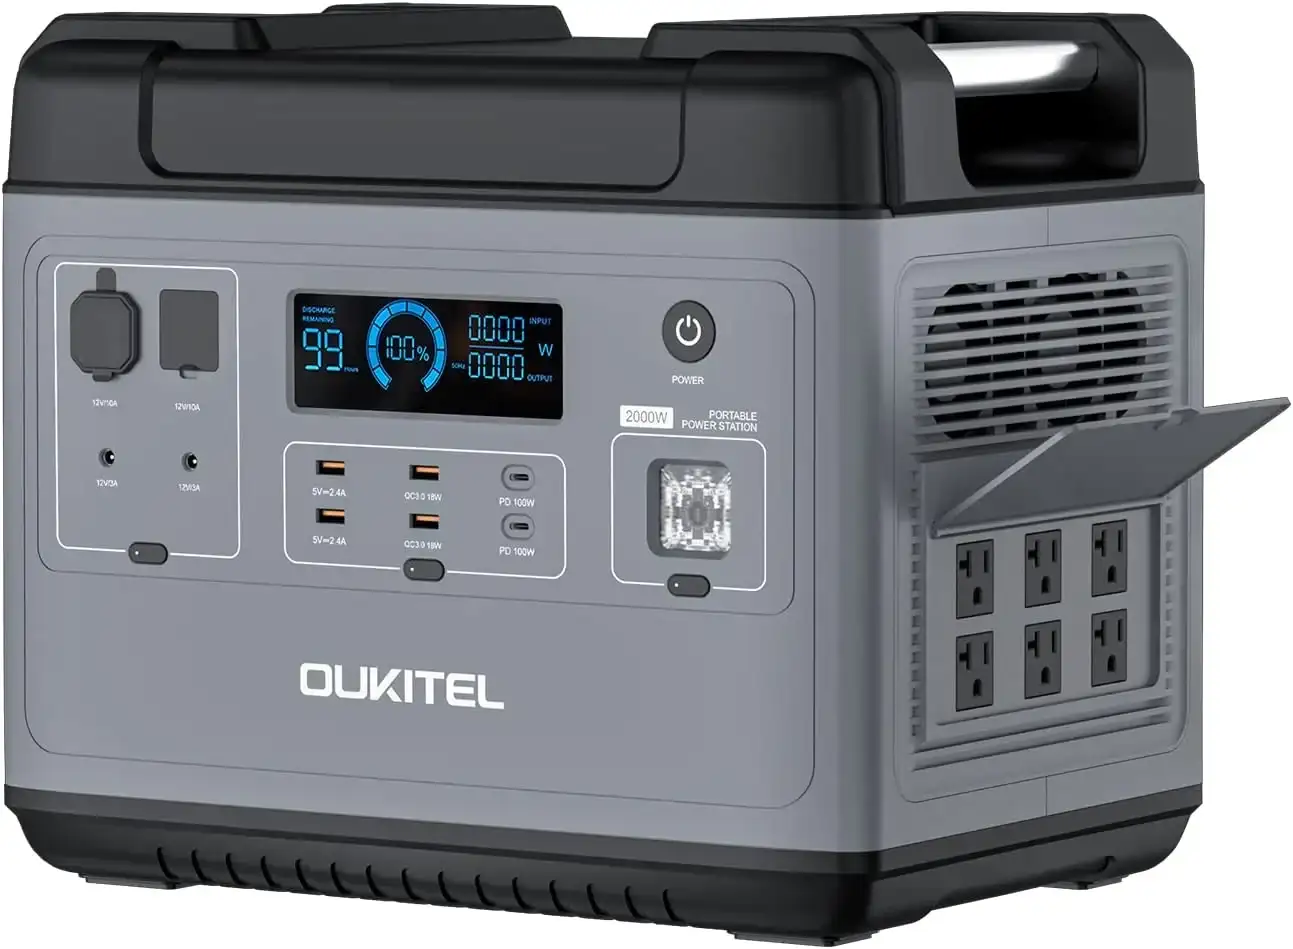 Image of Oukitel P2001 Portable Power Station